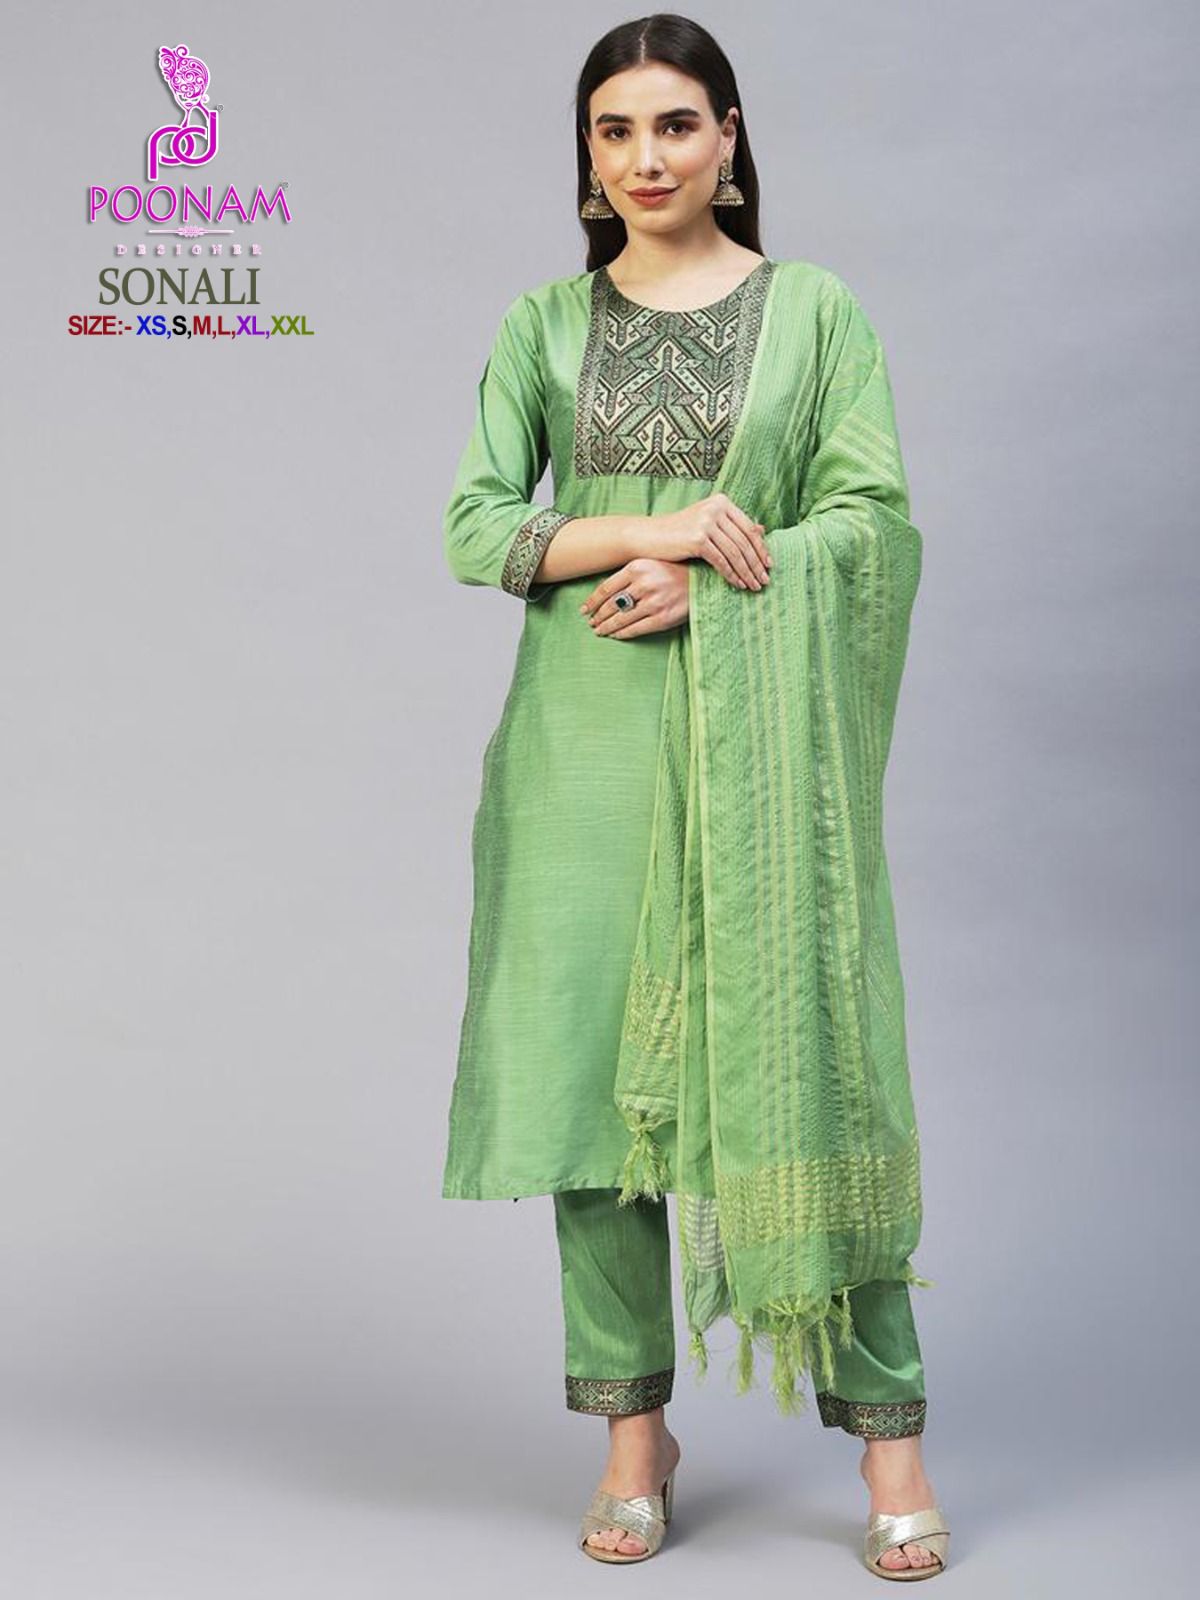 Poonam Sonali collection 4